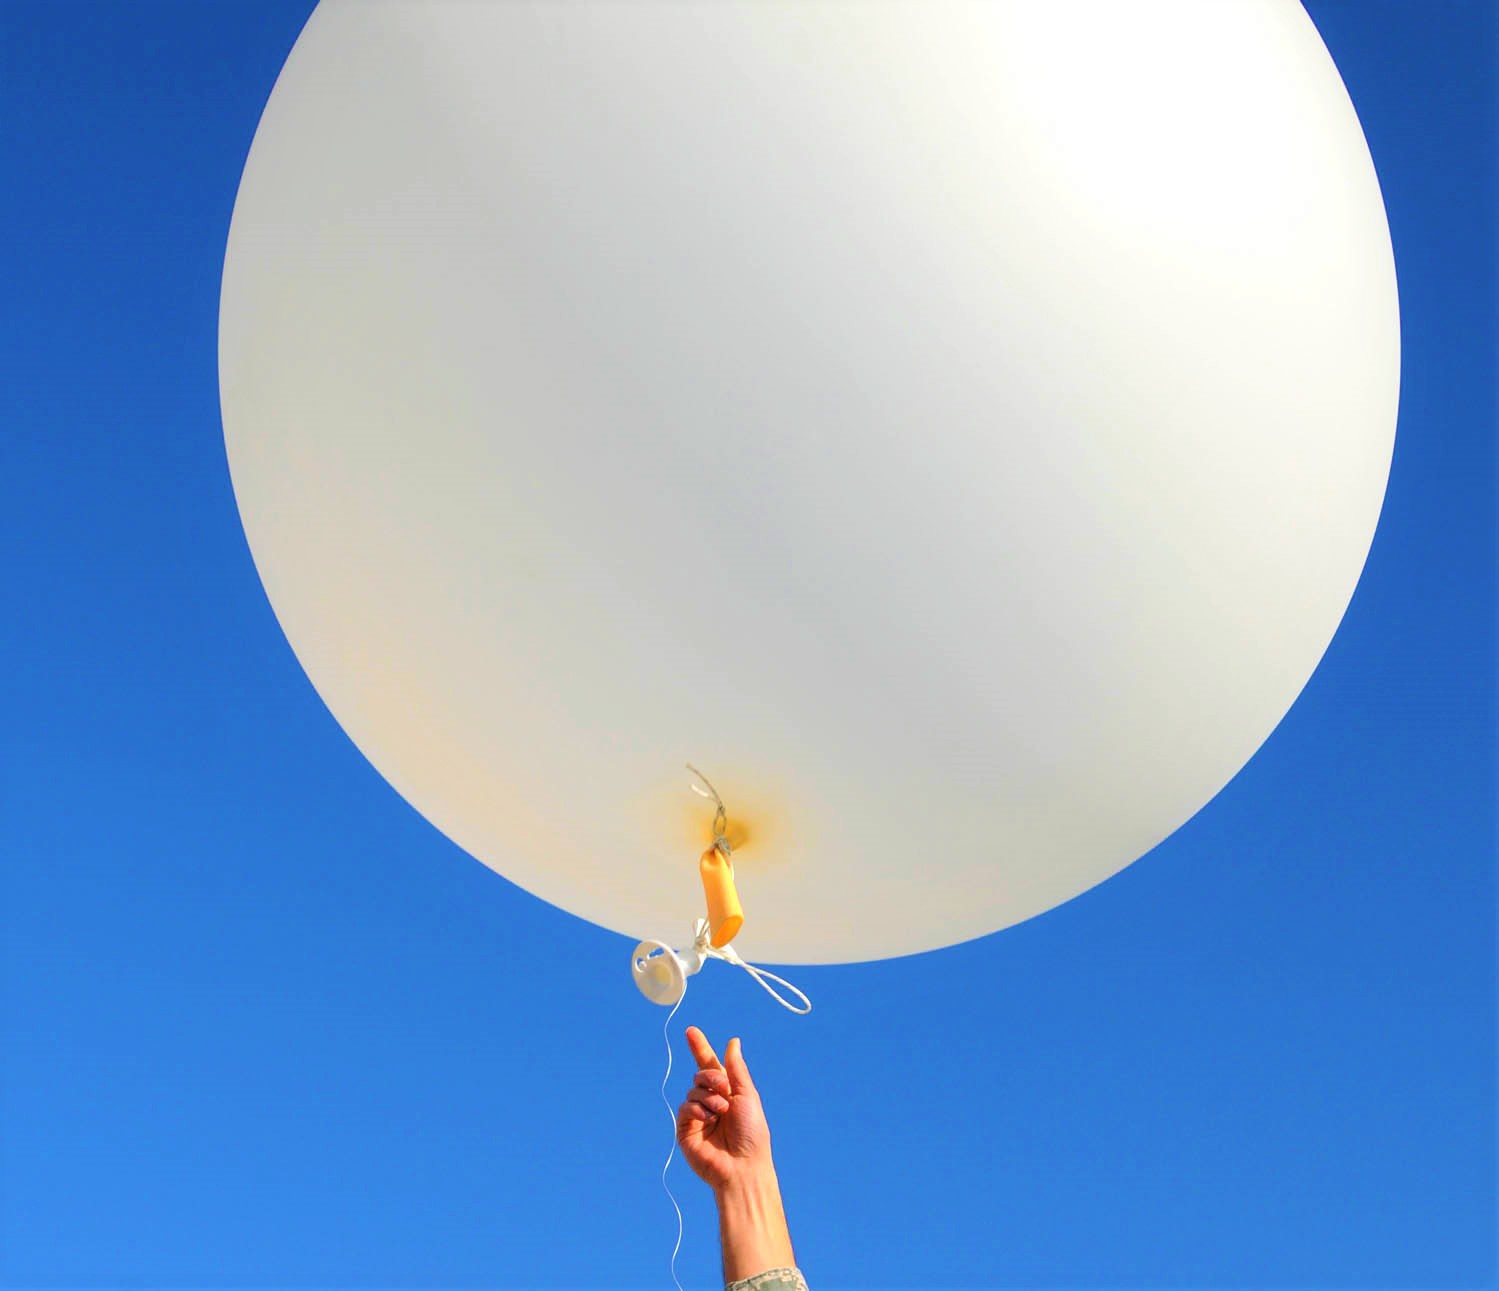 Hydrogen Balloon (steamexperiments.com)